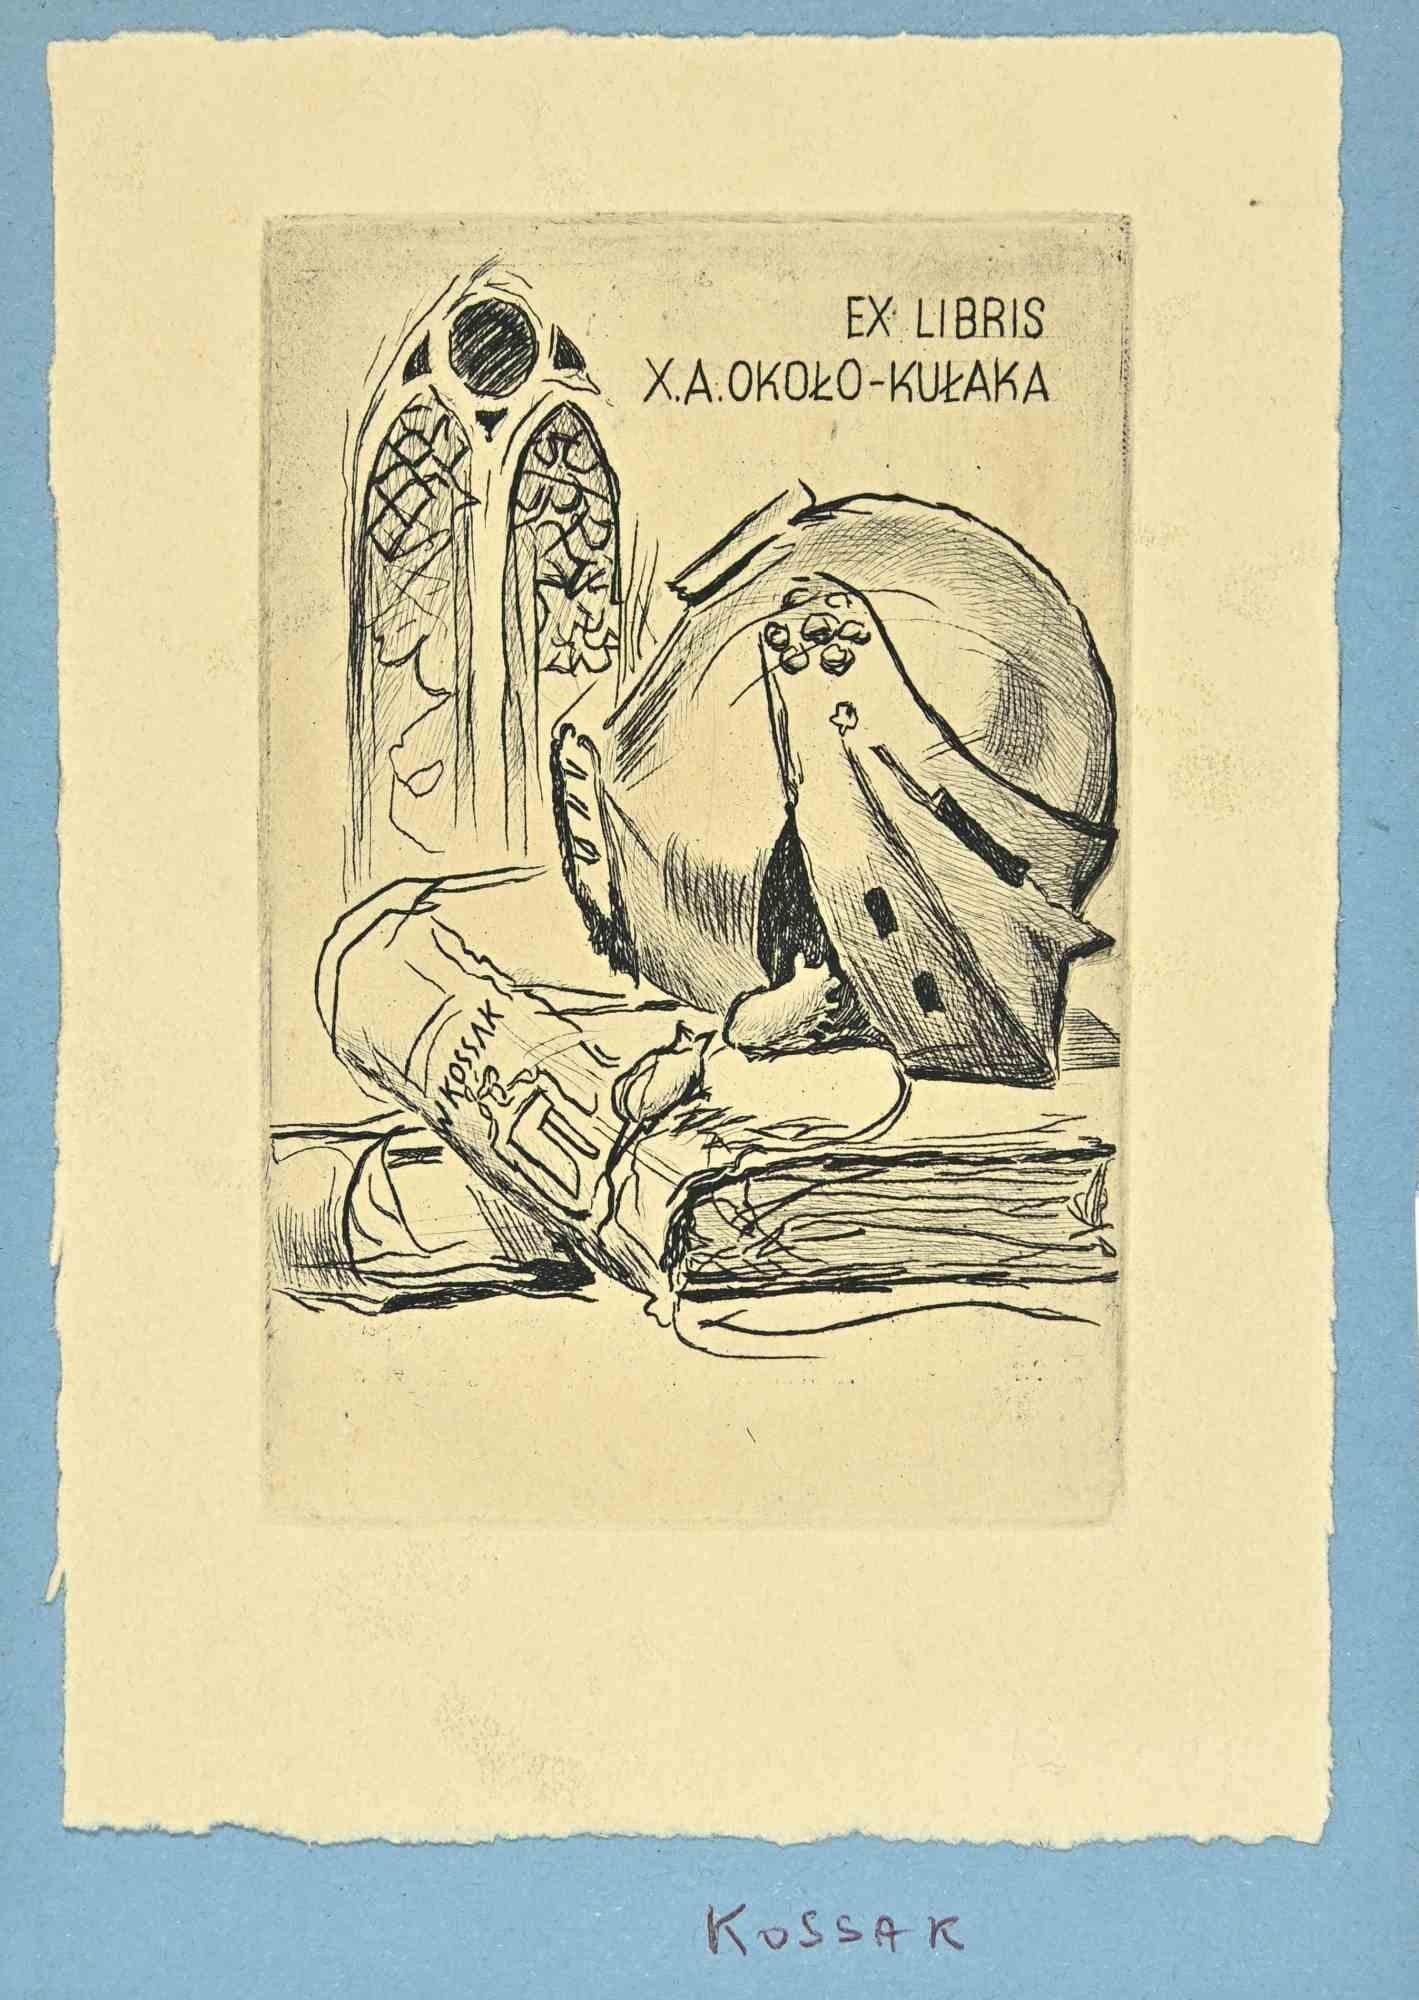 Unknown Figurative Print - Ex Libris  - X.A.Okoko-Kulaka - Woodcut - Mid 20th Century